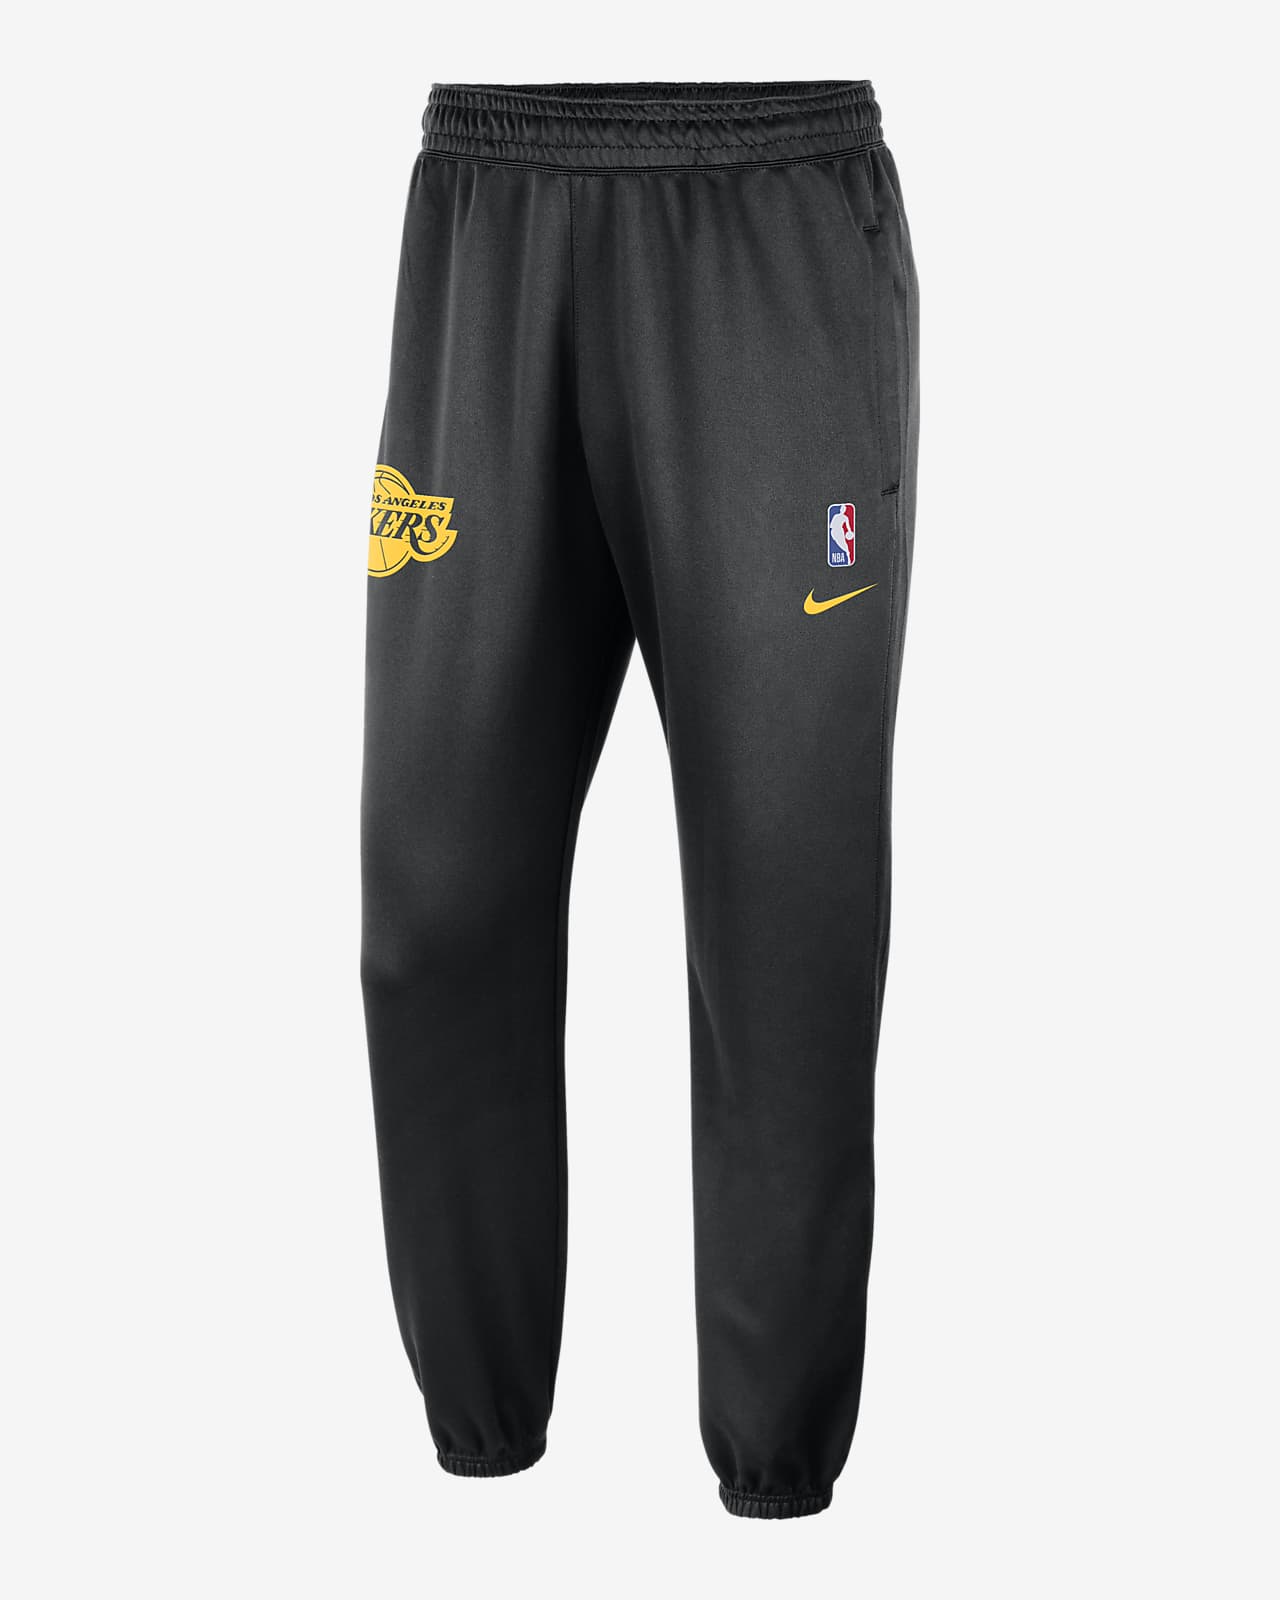 Nike Team 31 Courtside NBA Trousers Men's XL Basketball Pants Fleece  Joggers new | eBay